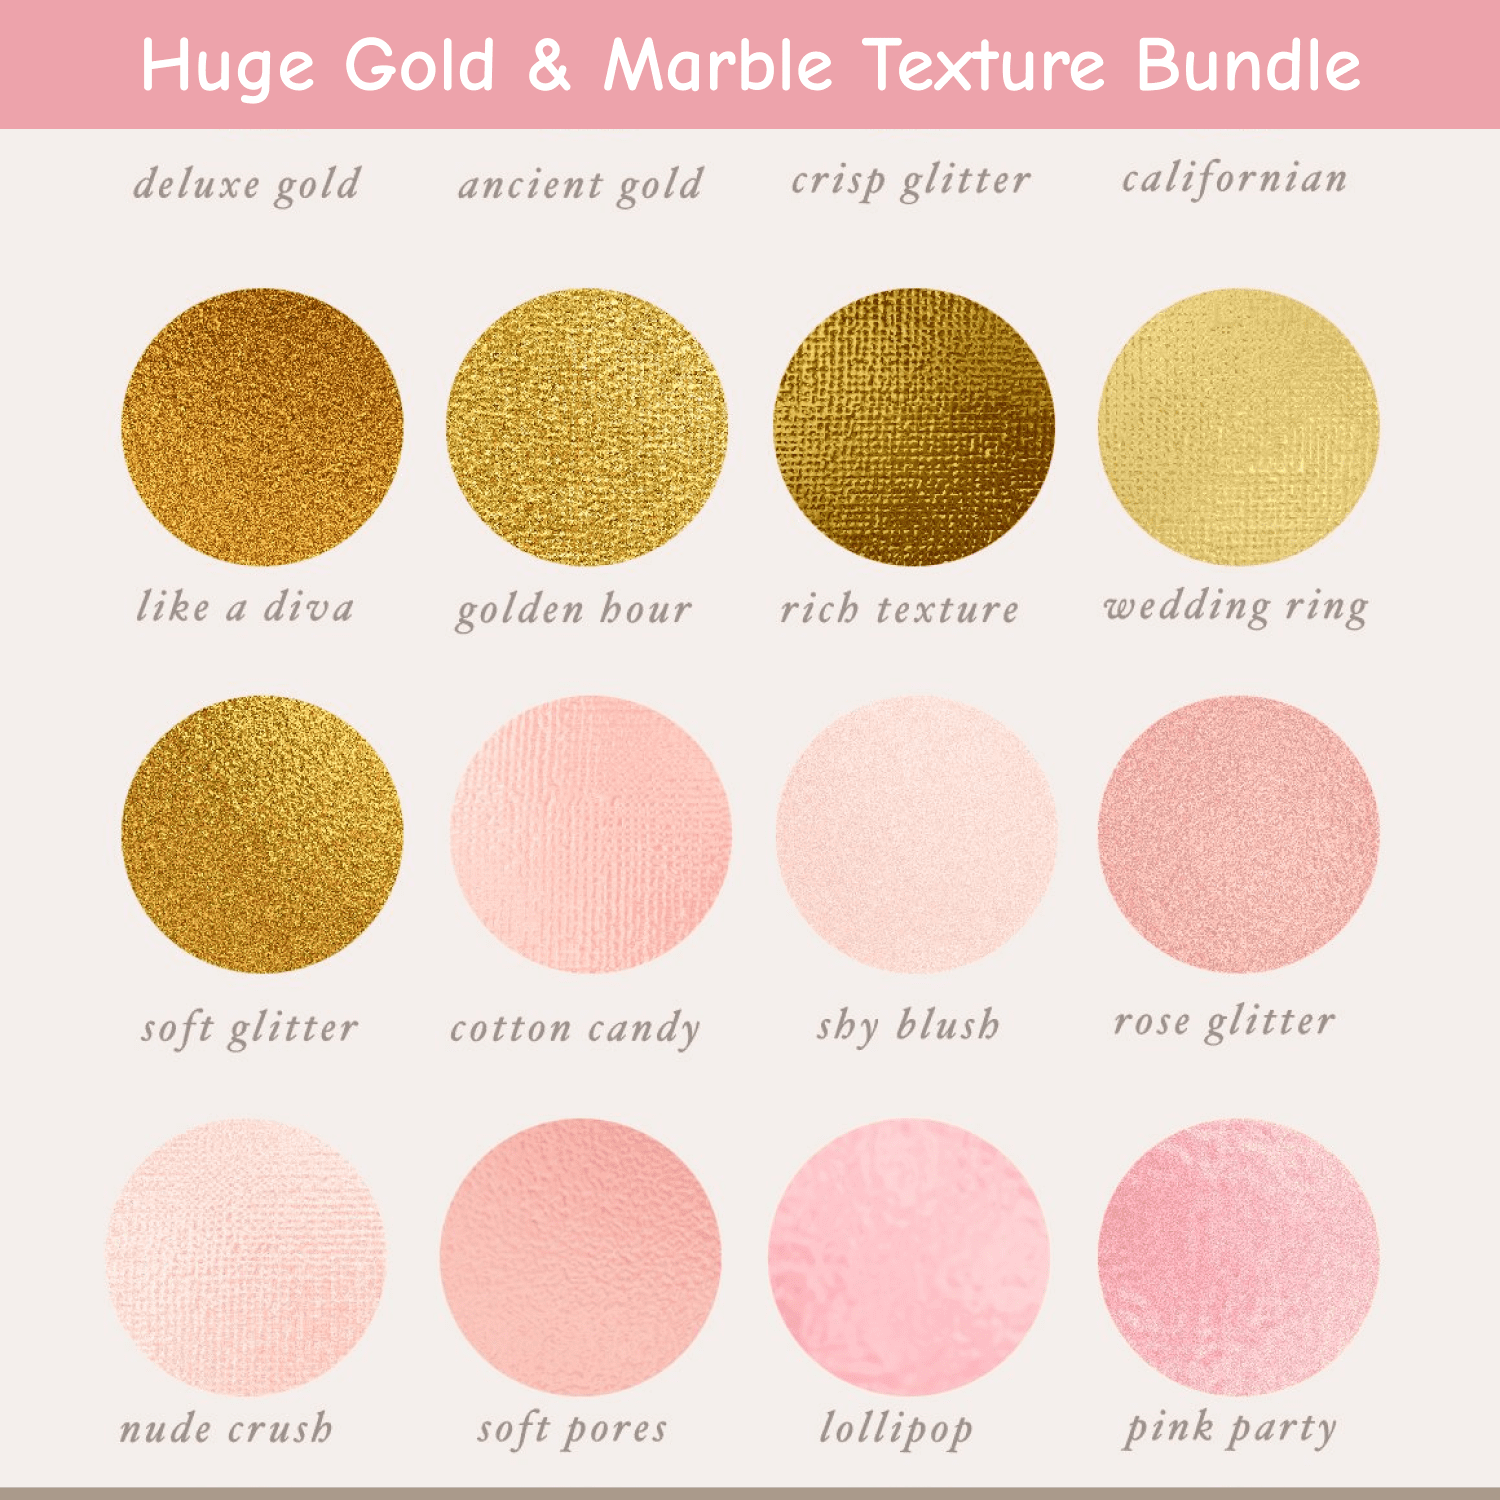 Huge Gold & Marble Texture Bundle.